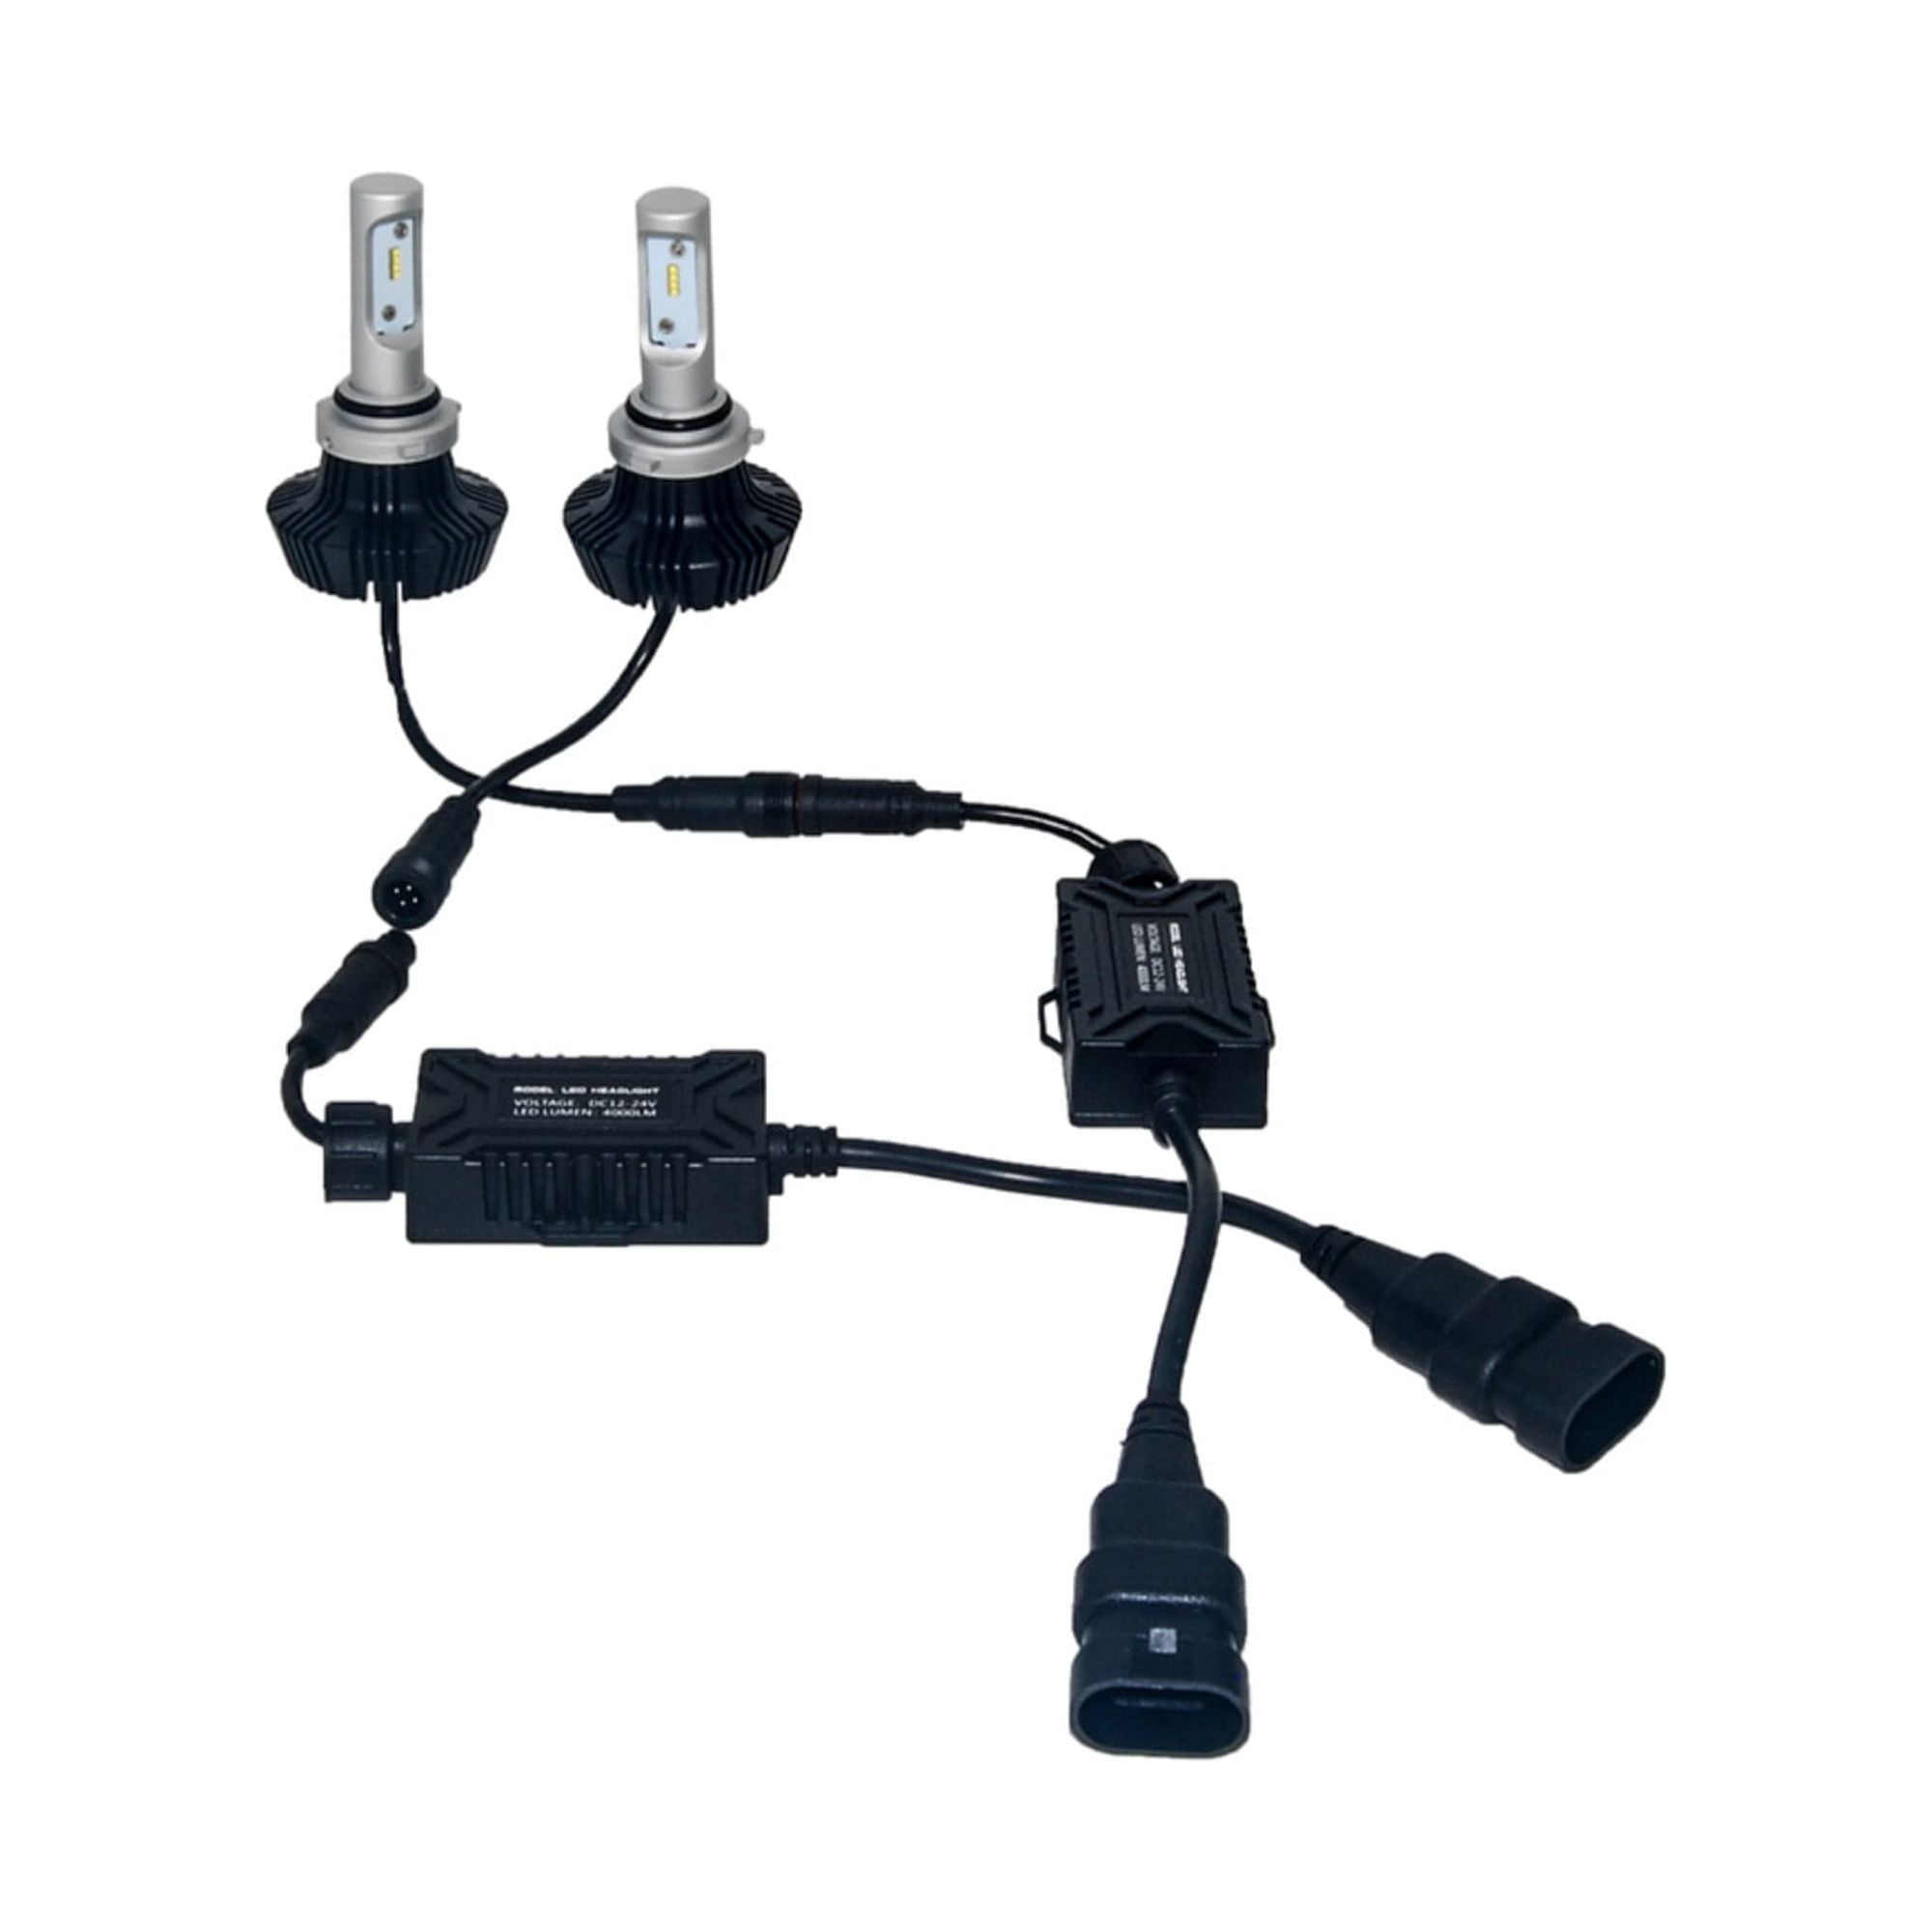 W) 7HL-H4 LED Headlight Kit by OZ-USA Dual Beam 4000LM Xenon White